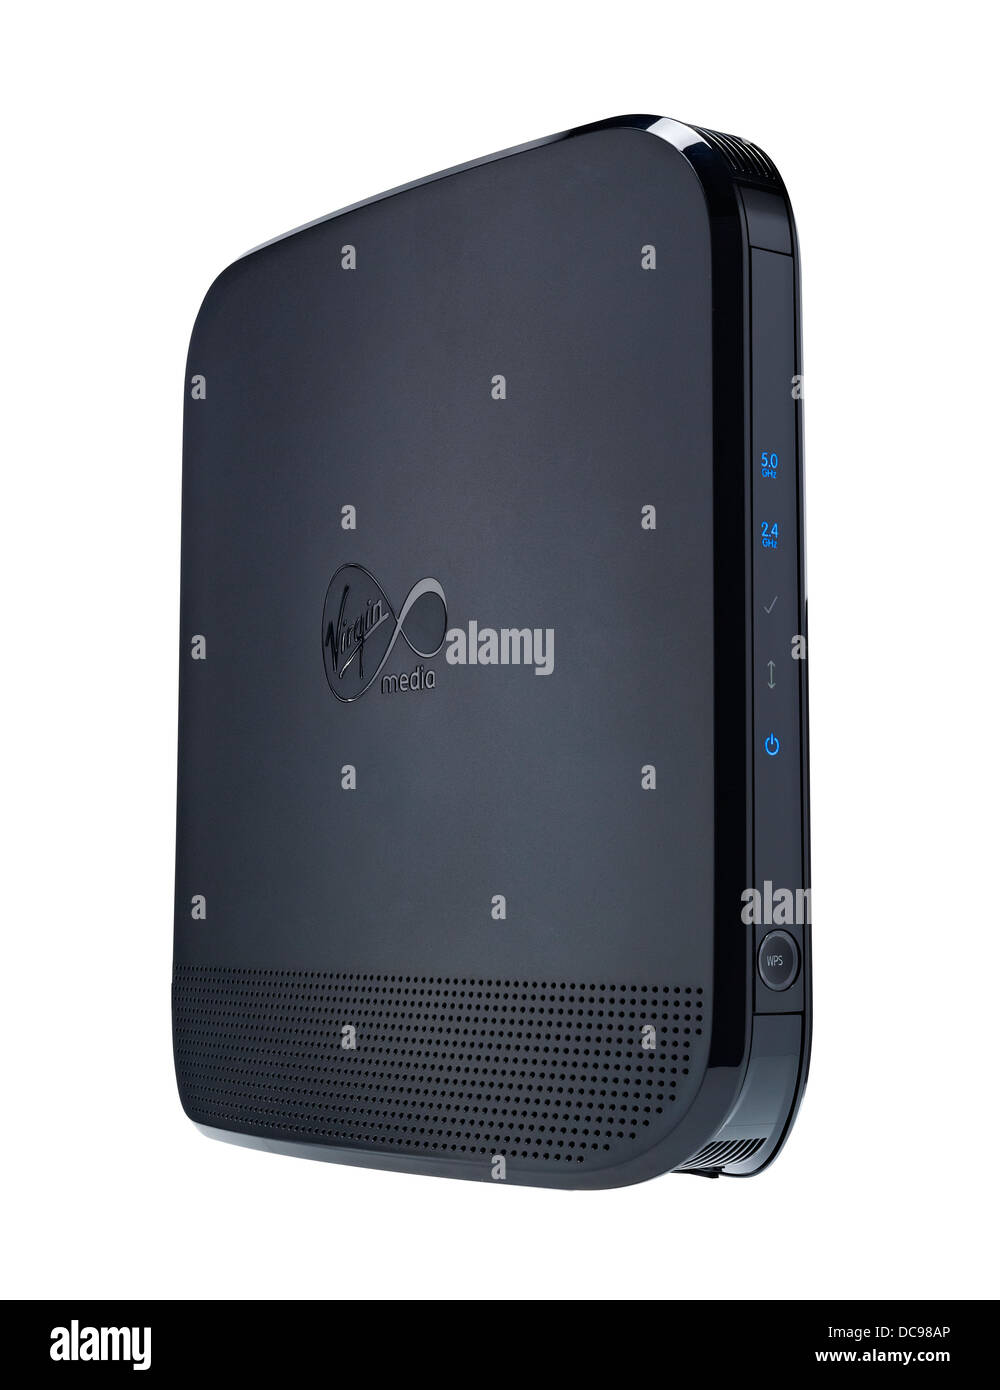 Wireless broadband router fotografías e imágenes de alta resolución - Alamy